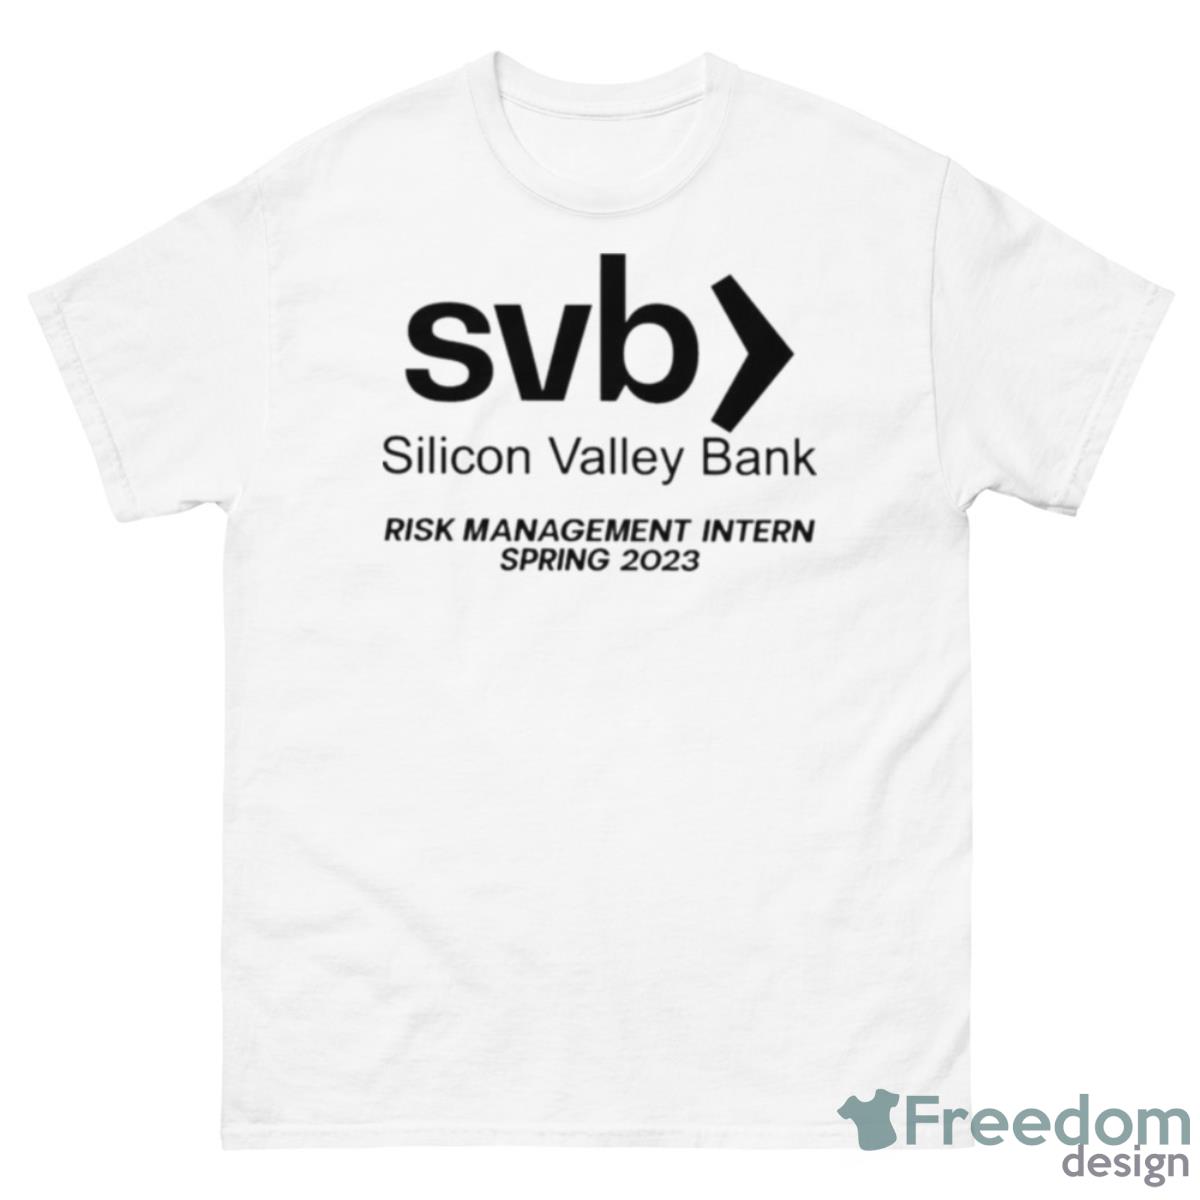 Svb Silicon Valley Bank Risk Management Intern Spring 2023 Shirt - 500 Men’s Classic Tee Gildan